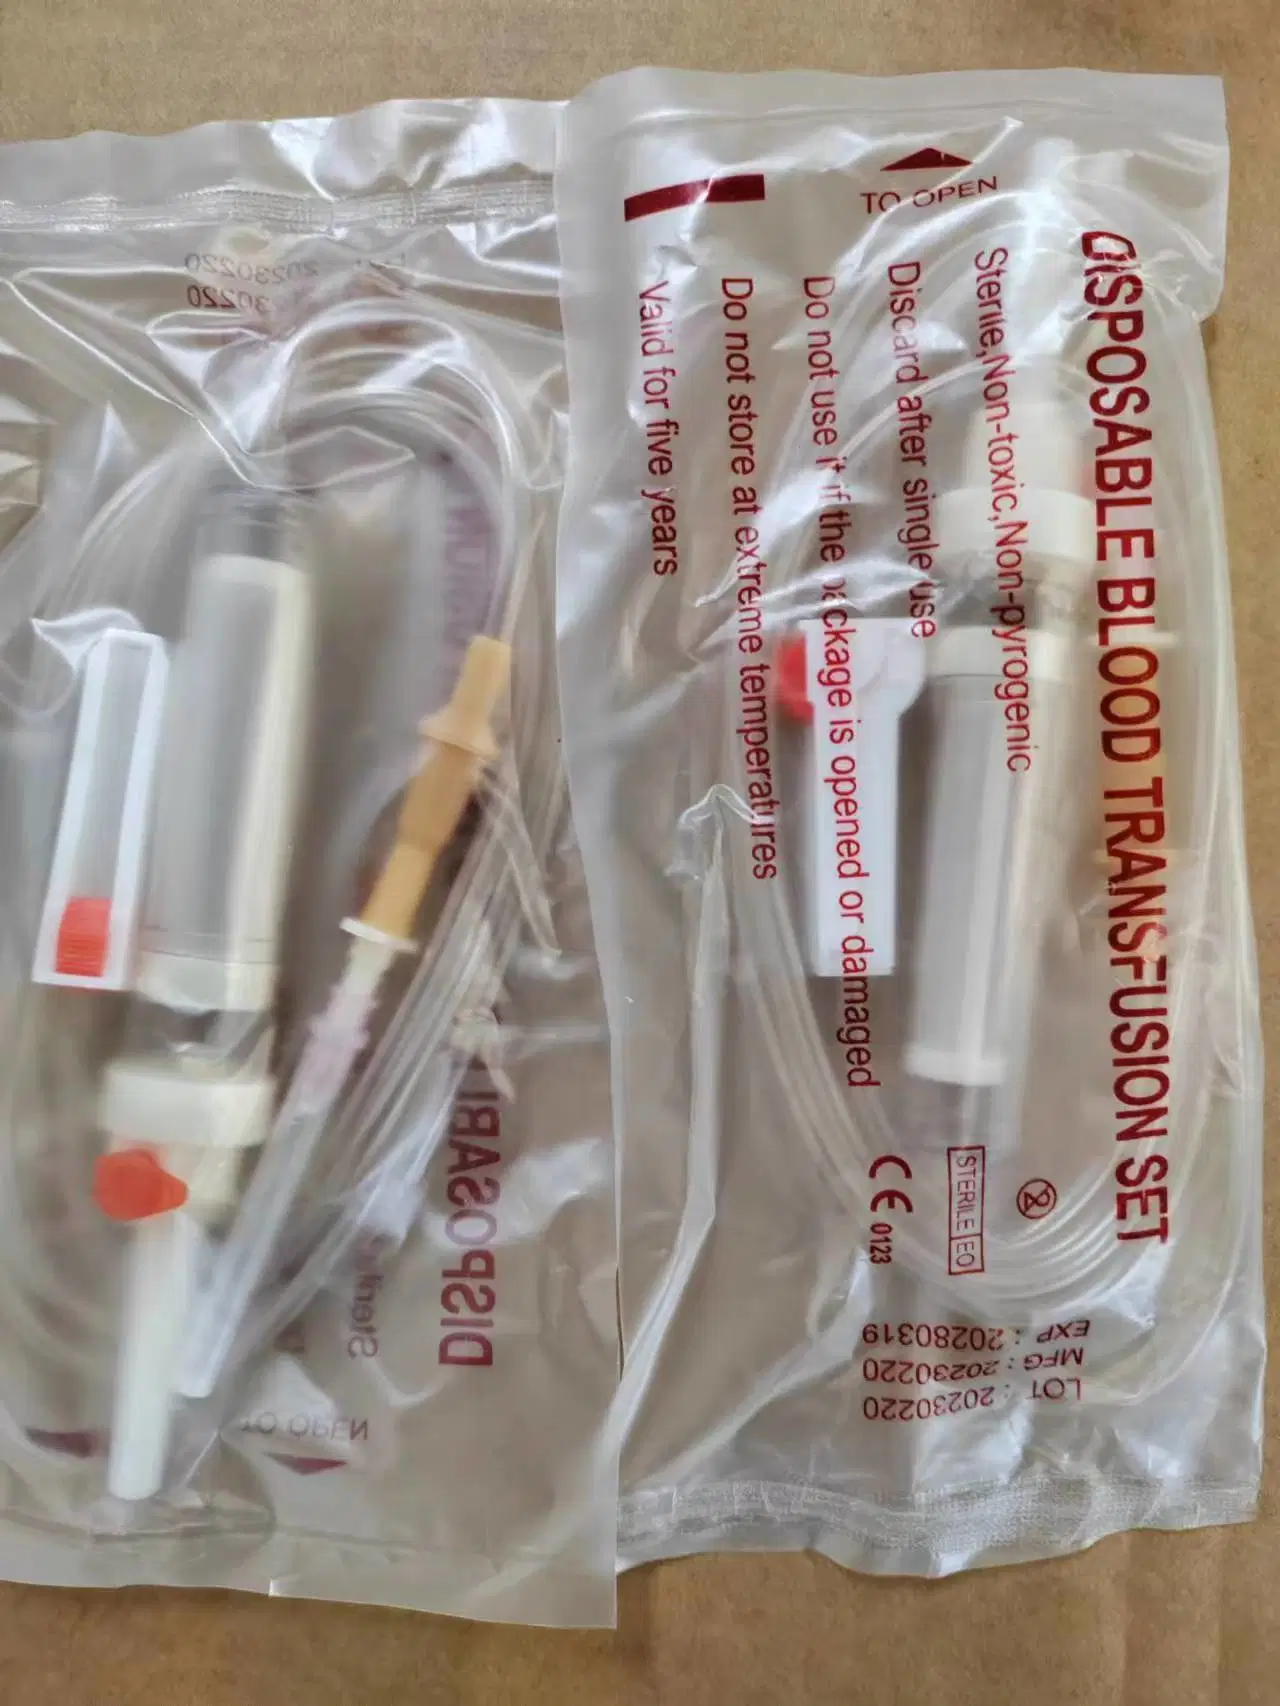 Disposable Blood Transfusion Set